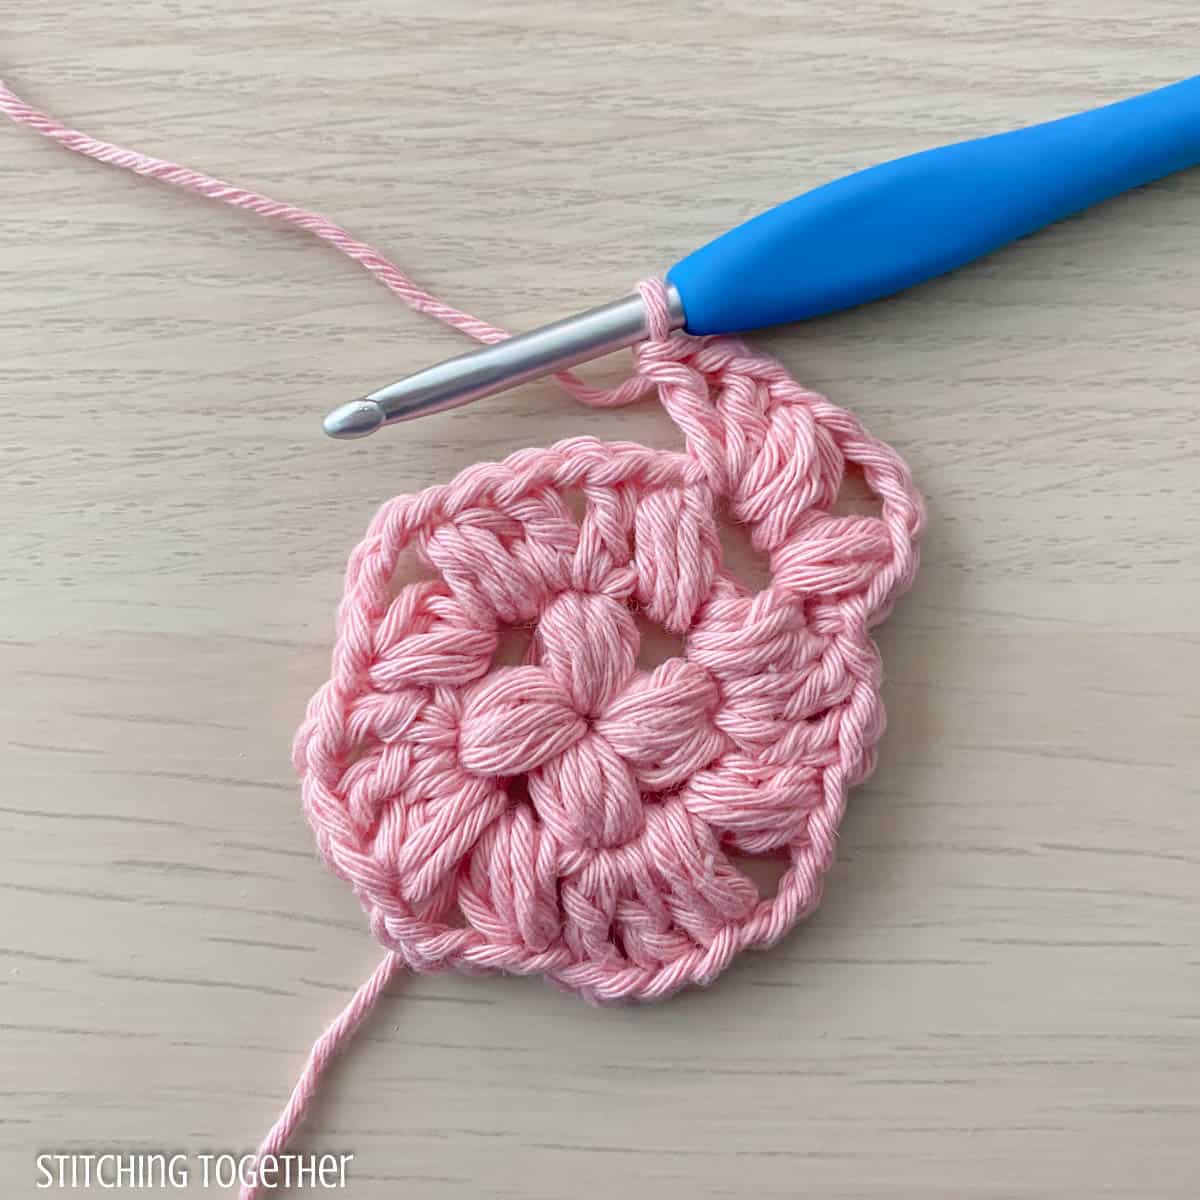 crochet square in progress